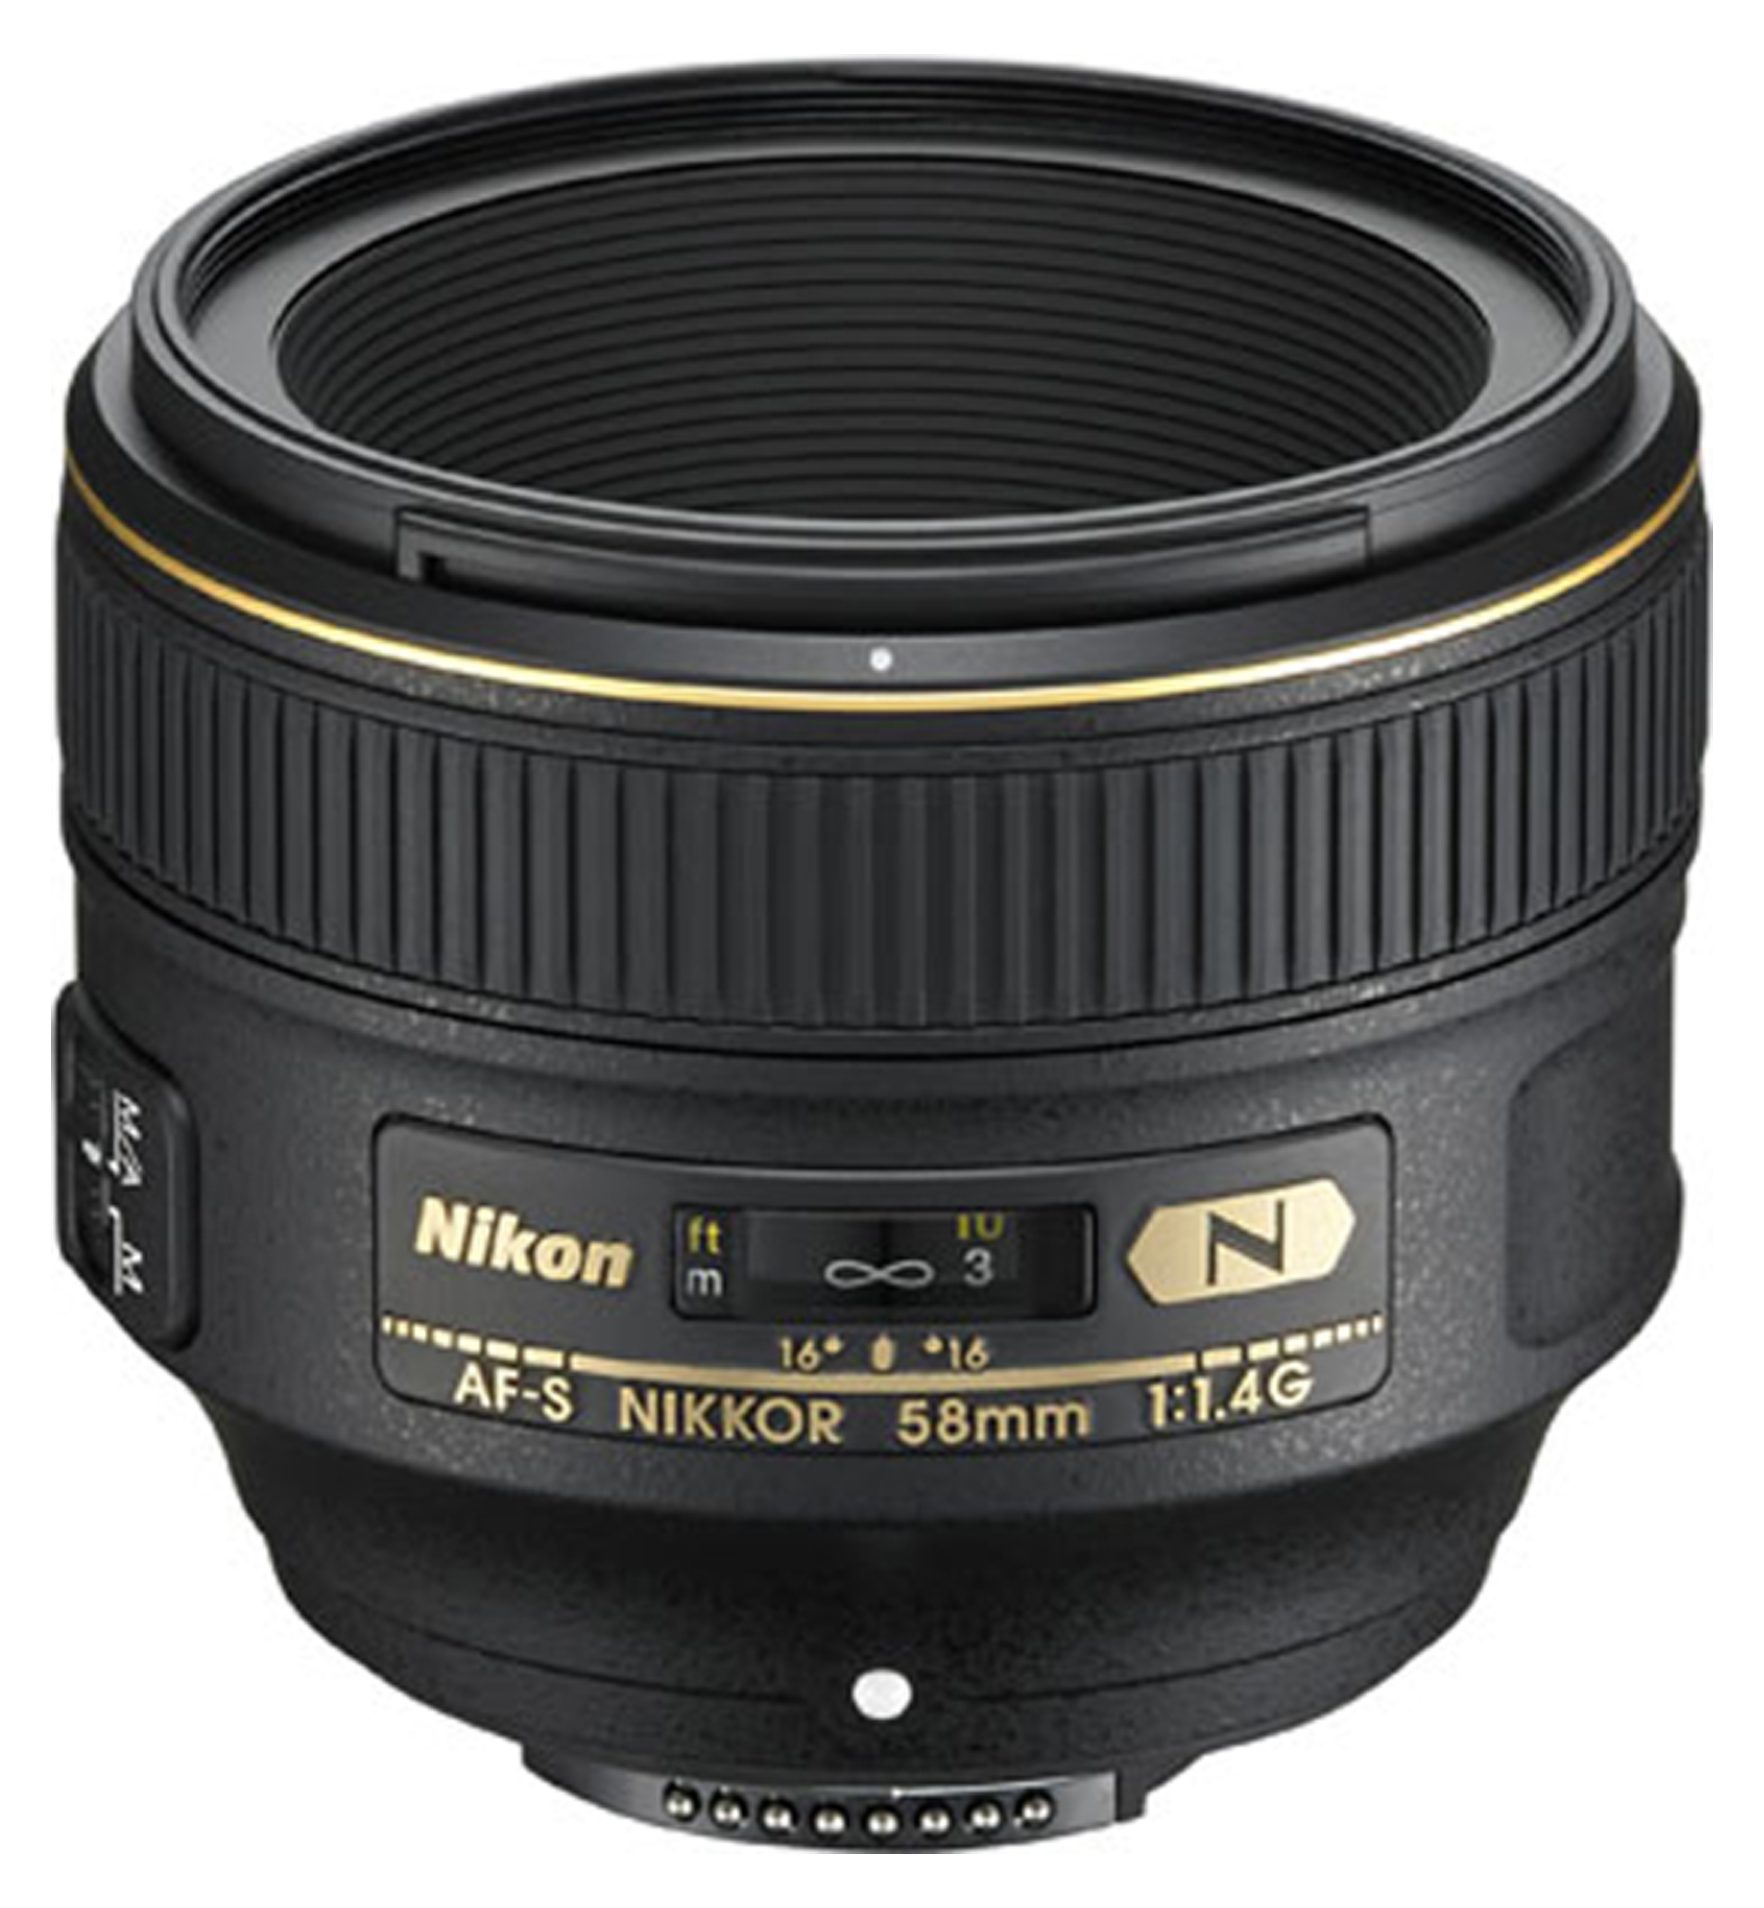 Купить объективы nikon f. Объектив Nikon 58mm f/1.4g af-s Nikkor. Nikon af-s 58mm/1.4g. Объектив Nikon 50mm f/1.4g af-s Nikkor. Nikon af-s Nikkor 58mm f/1.4g (байонет f).